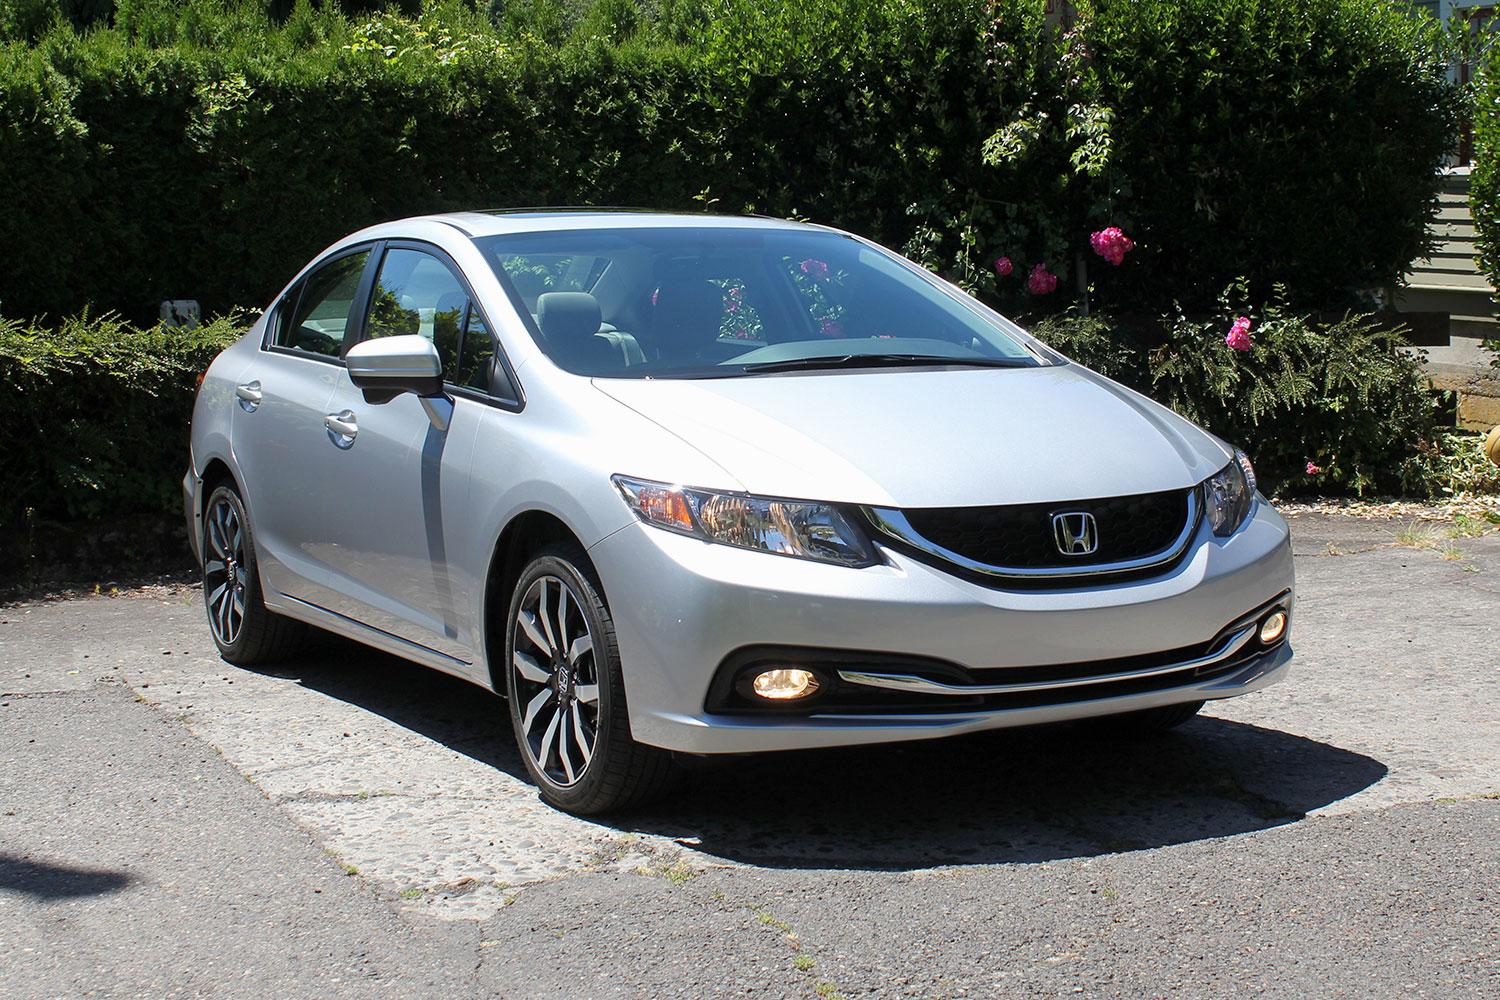 https://www.digitaltrends.com/wp-content/uploads/2015/07/2015-Honda-Civic-EX-front-left-angle.jpg?fit=1500%2C1000&p=1